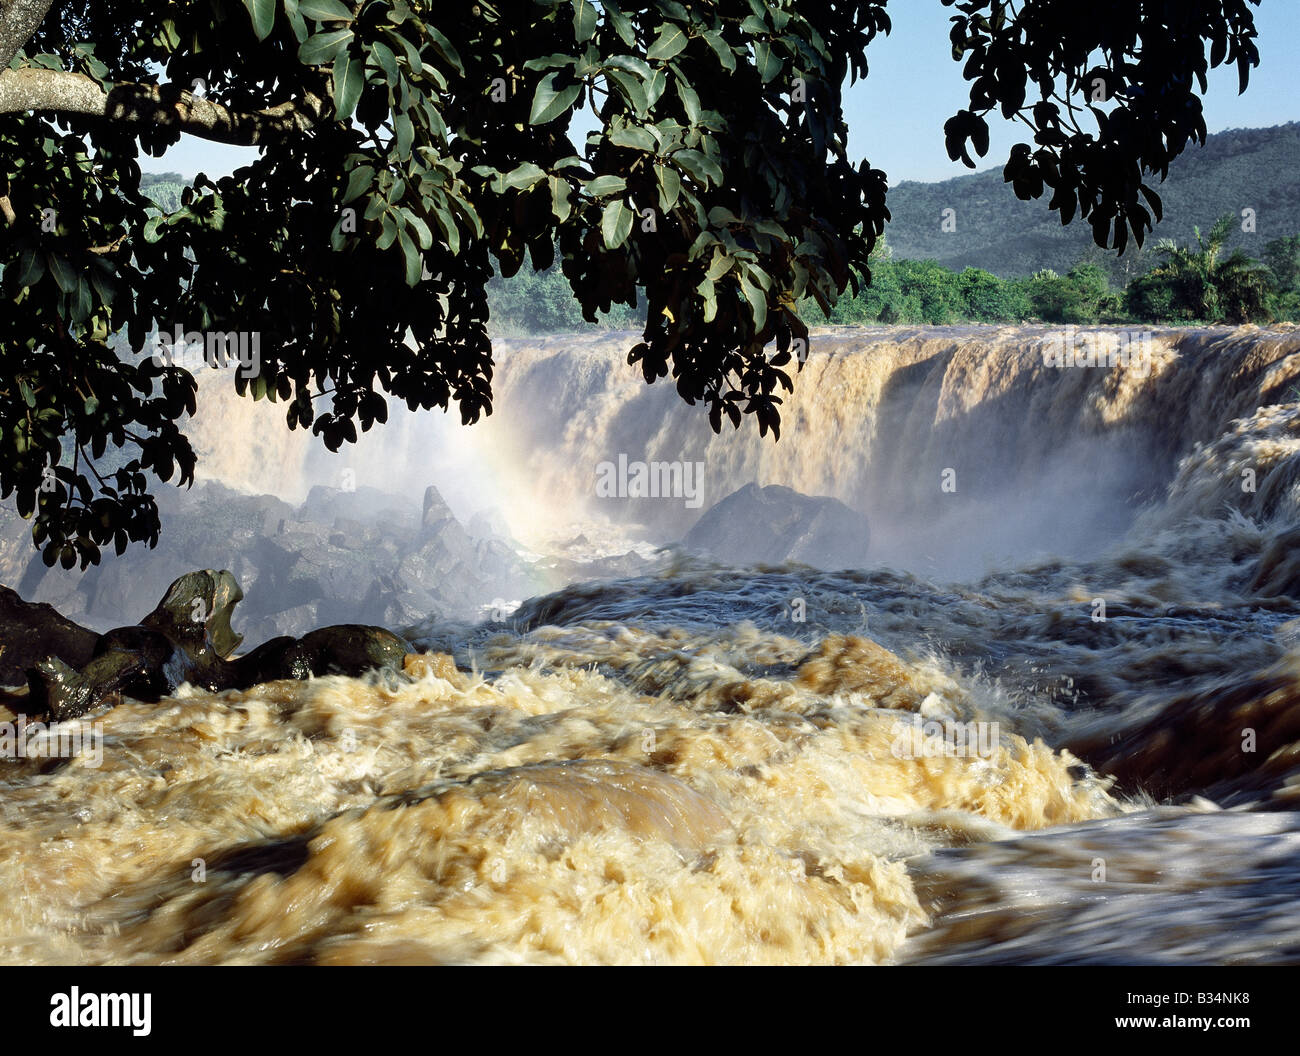 Kenia, Thika Bezirk, Athi River. Vierzehn fällt am Athi River nach starkem Regen. Stockfoto